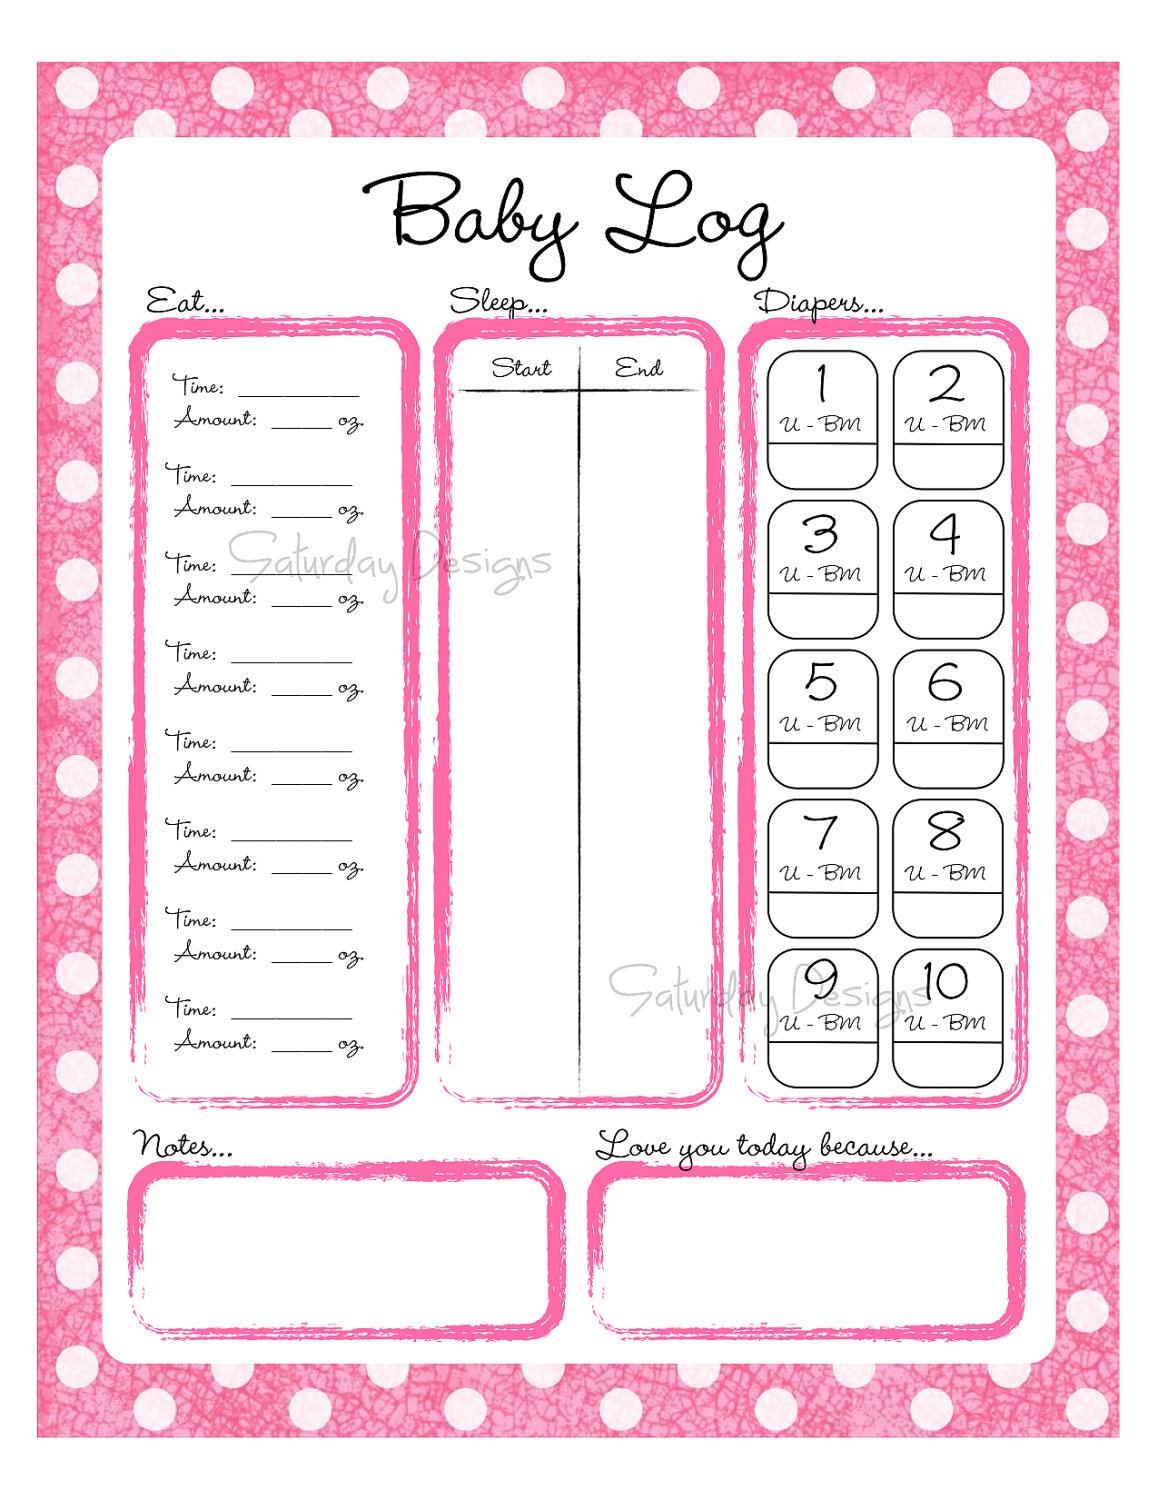 baby feeding schedule chart - DriverLayer Search Engine